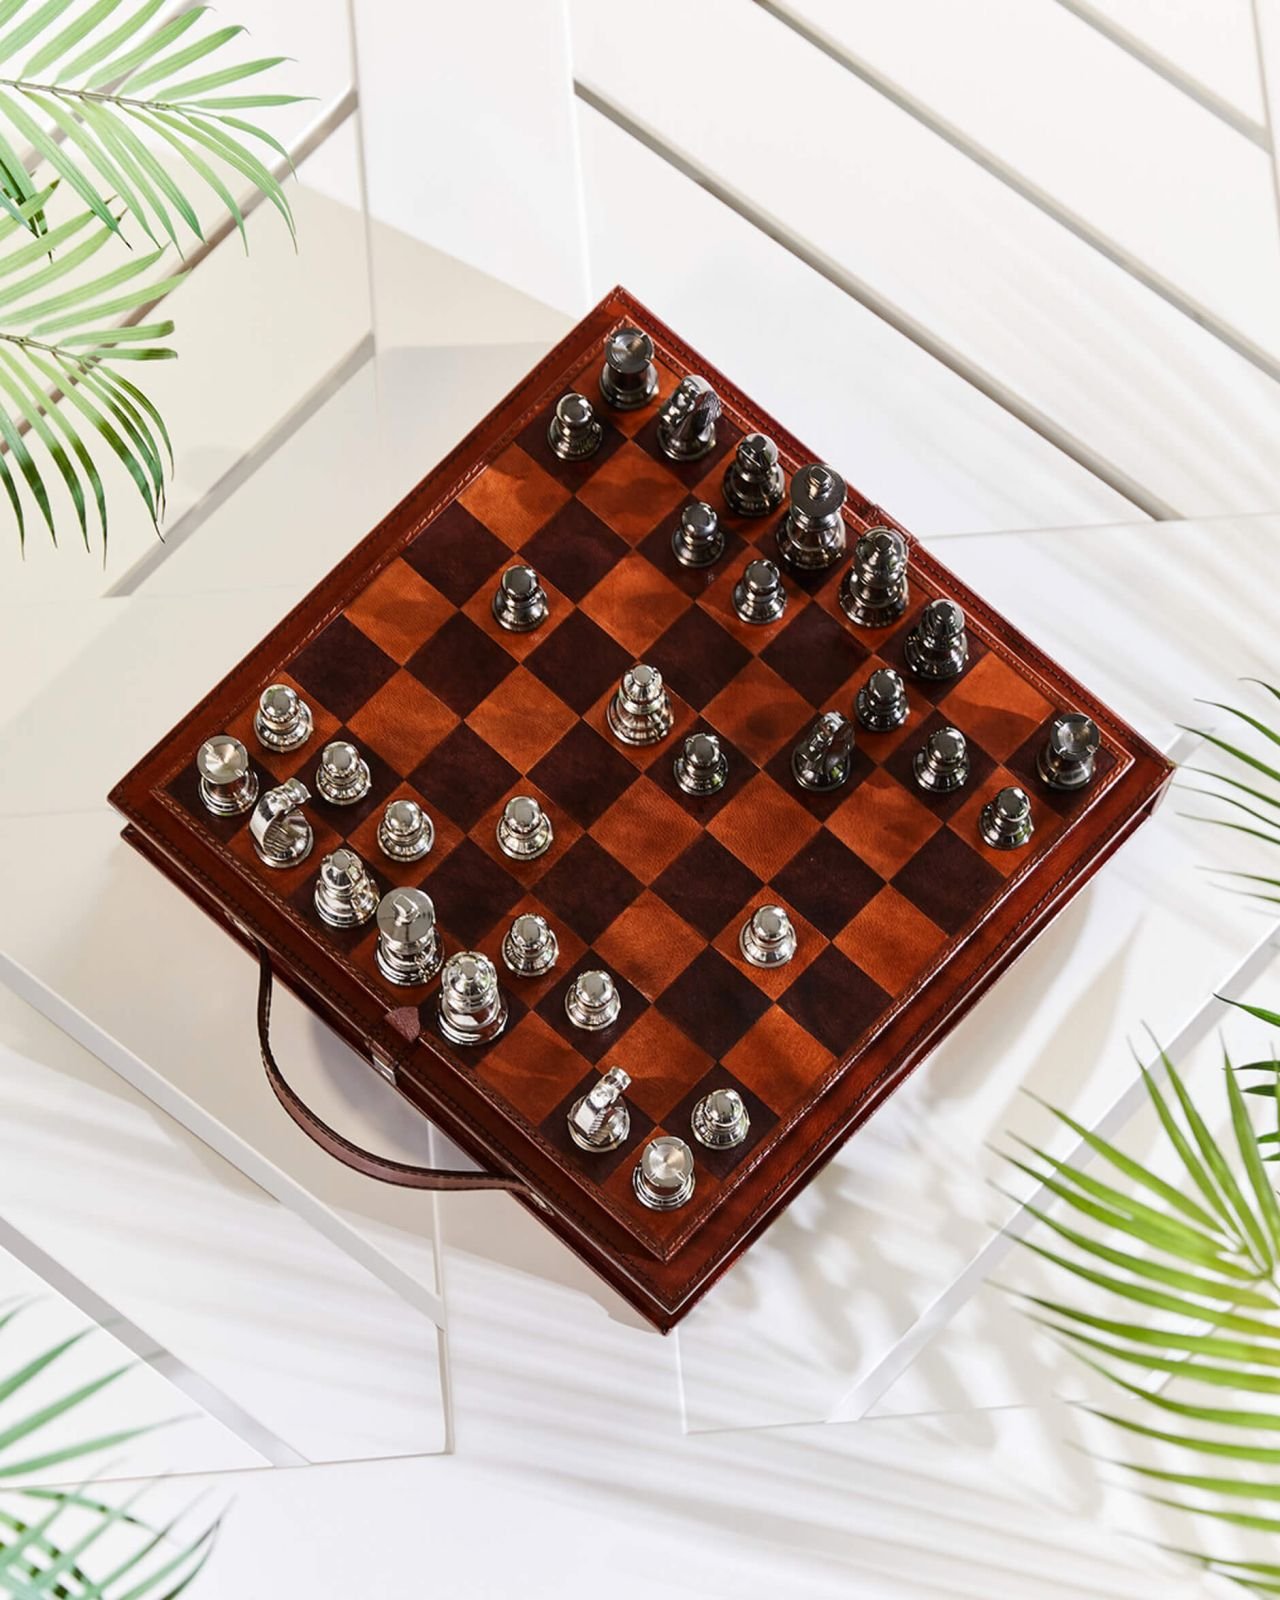 Kensington chess set, leather/metal